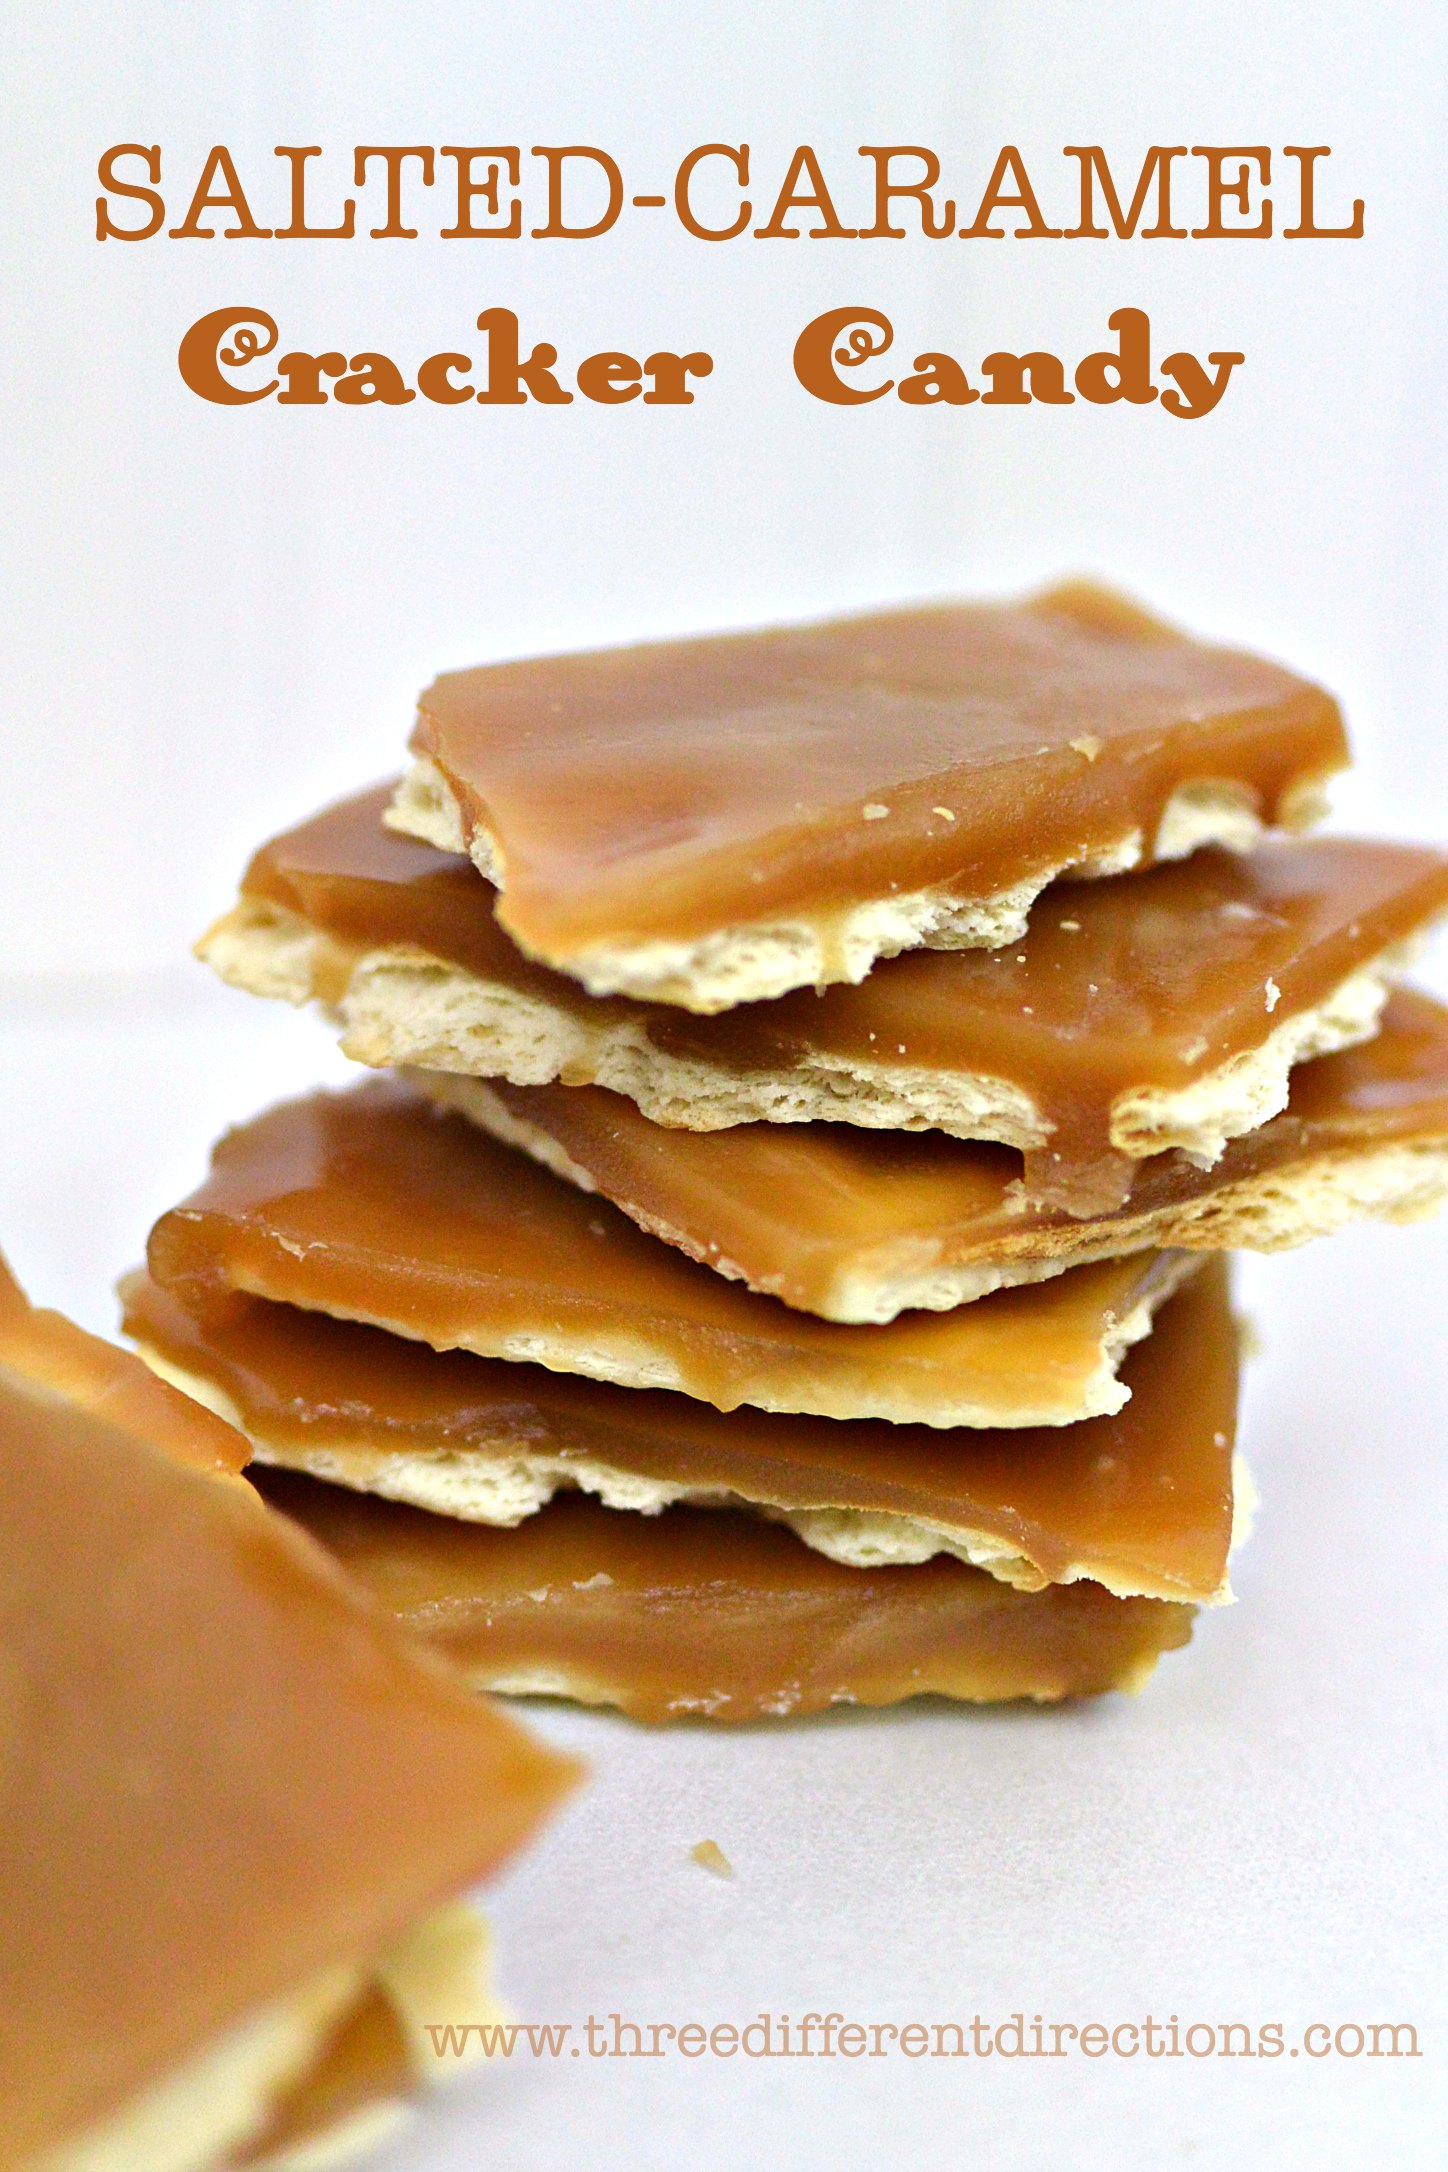 Salted-Caramel Cracker Candy